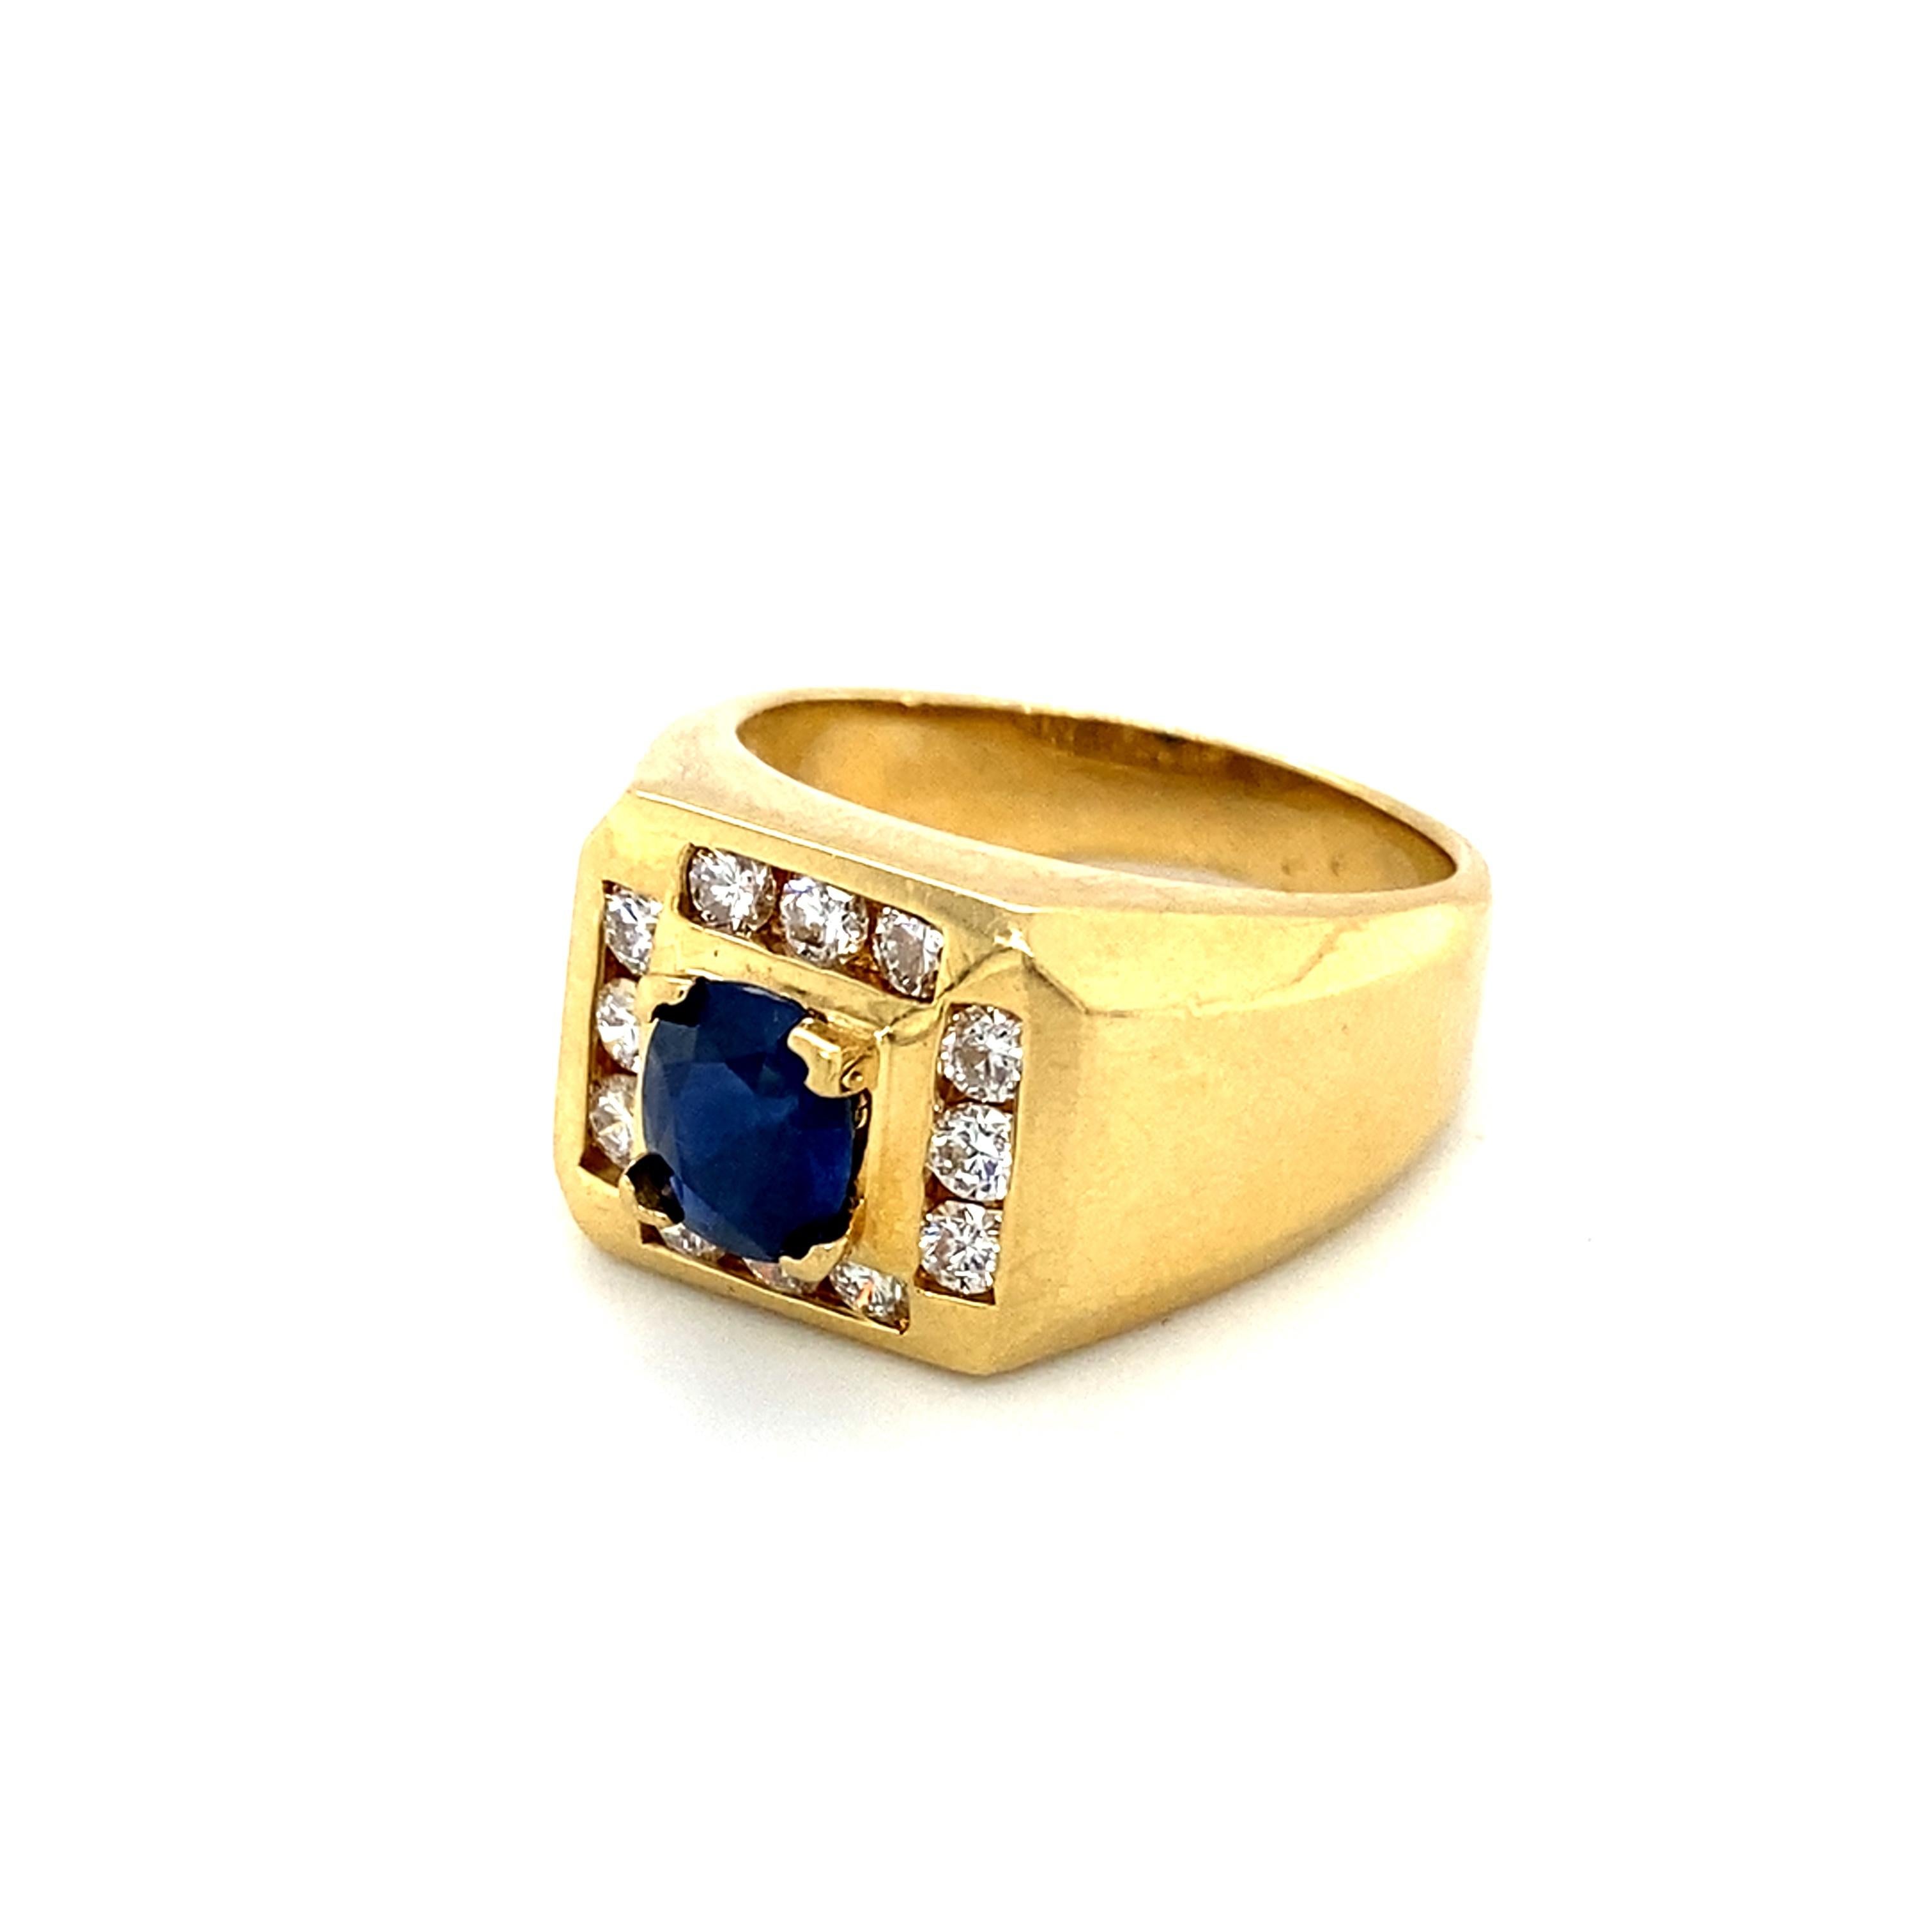 Oval Cut 1.27 Carat Sapphire 0.36 Carat Diamond Ring in 18 Karat Yellow Gold